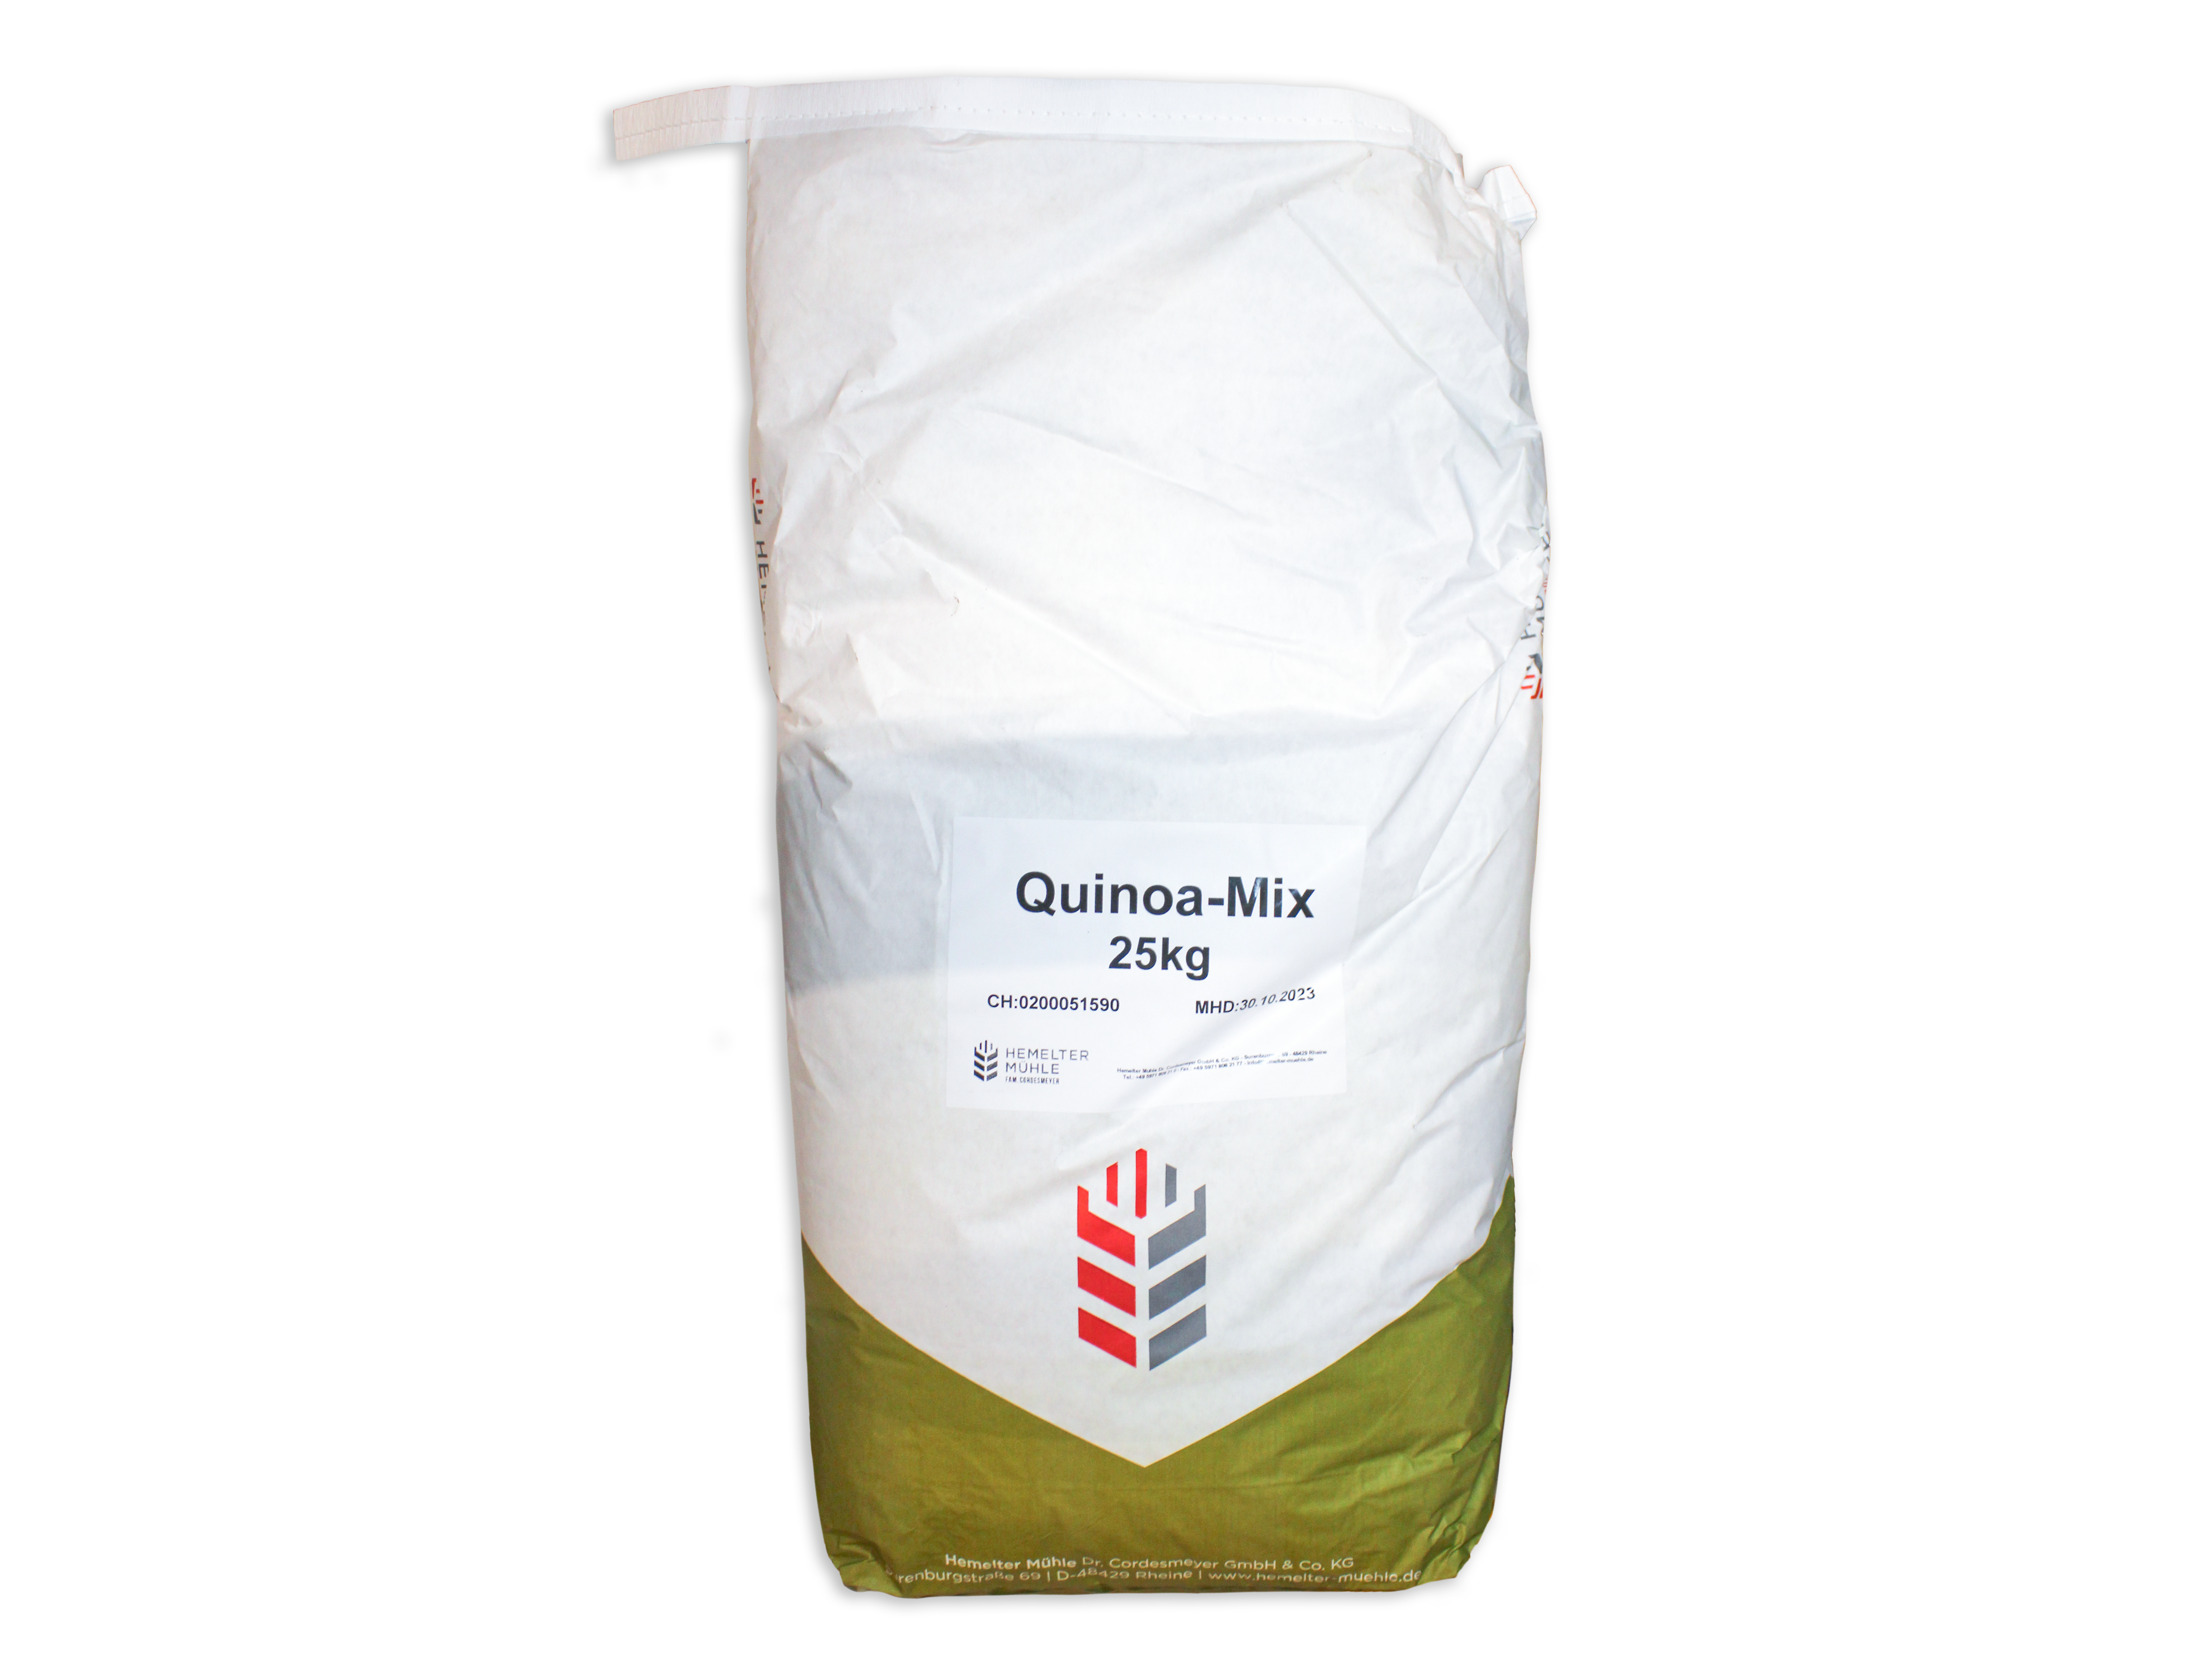 Hemelter Mühle Maxiback Quinoa Mix 25kg